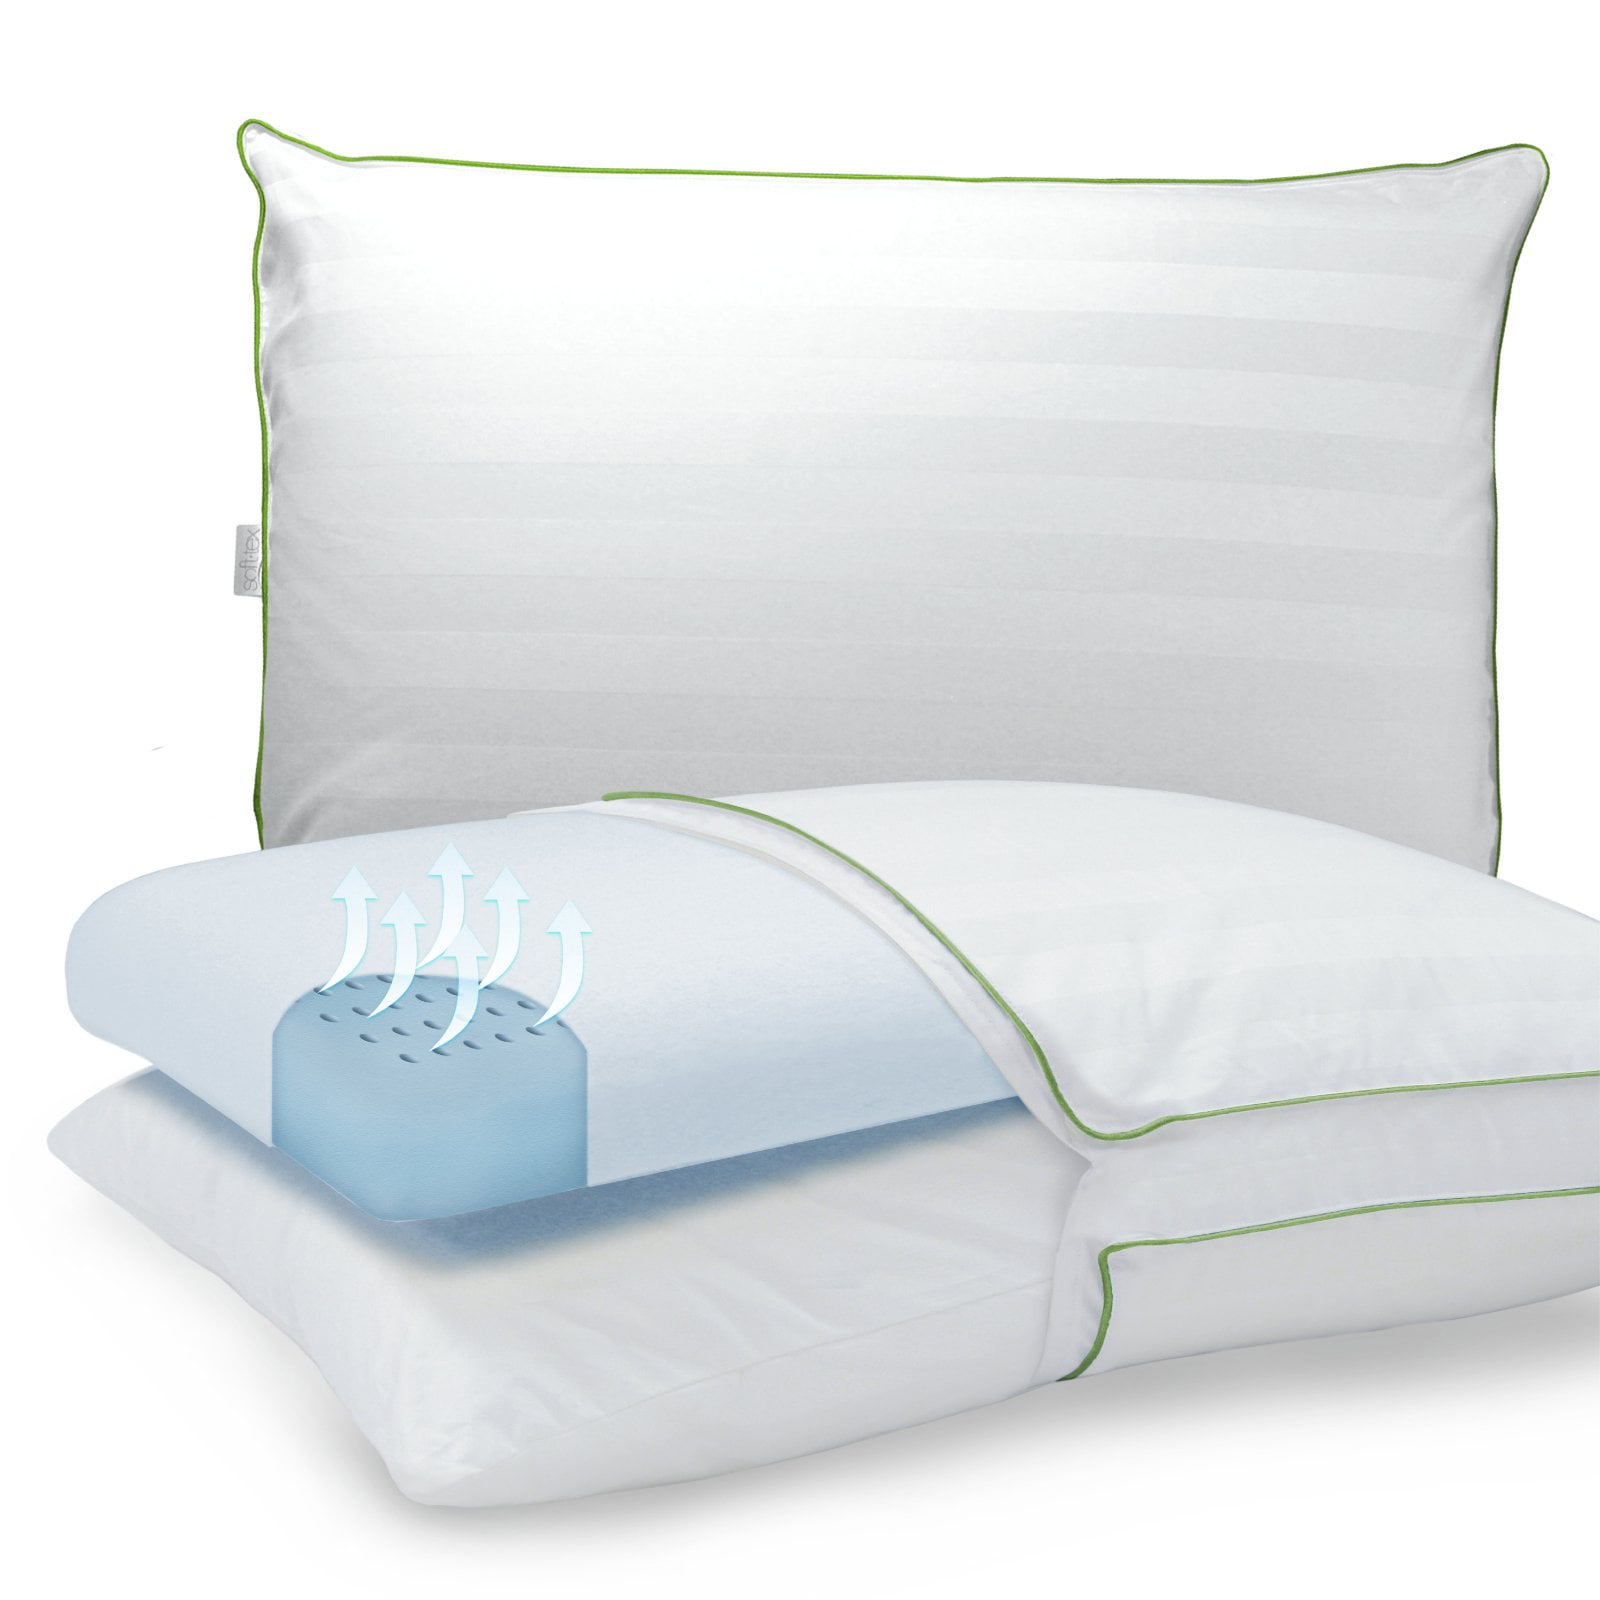 soft tex sensorpedic pillow